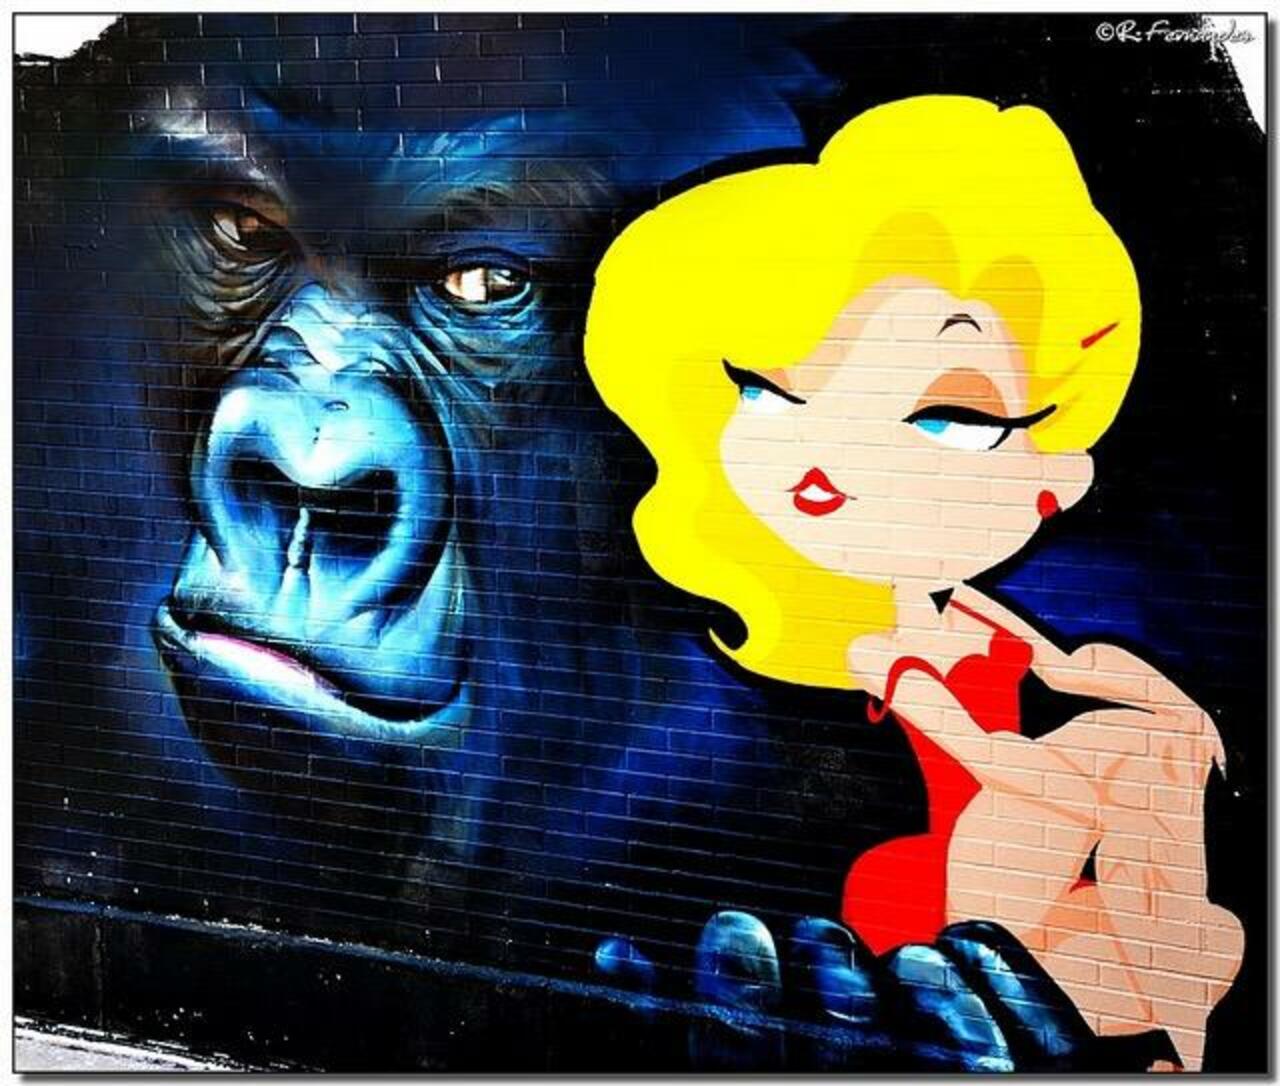 King Kong Graffiti
#streetart #art #mural #graffiti http://t.co/UwM76I5e0U